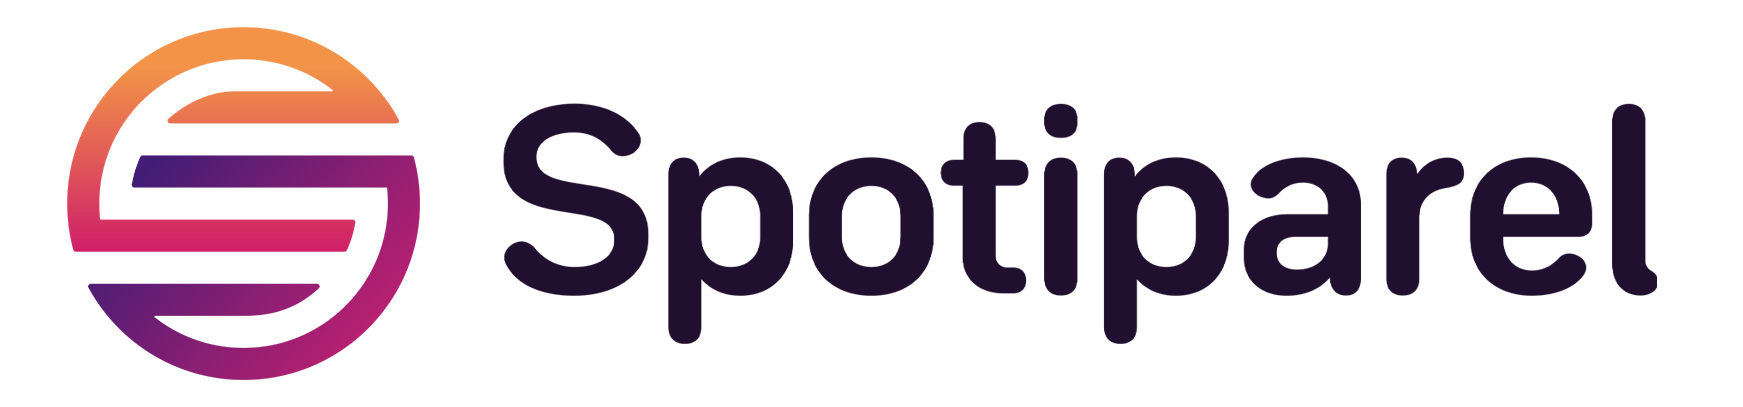 Spotiparel